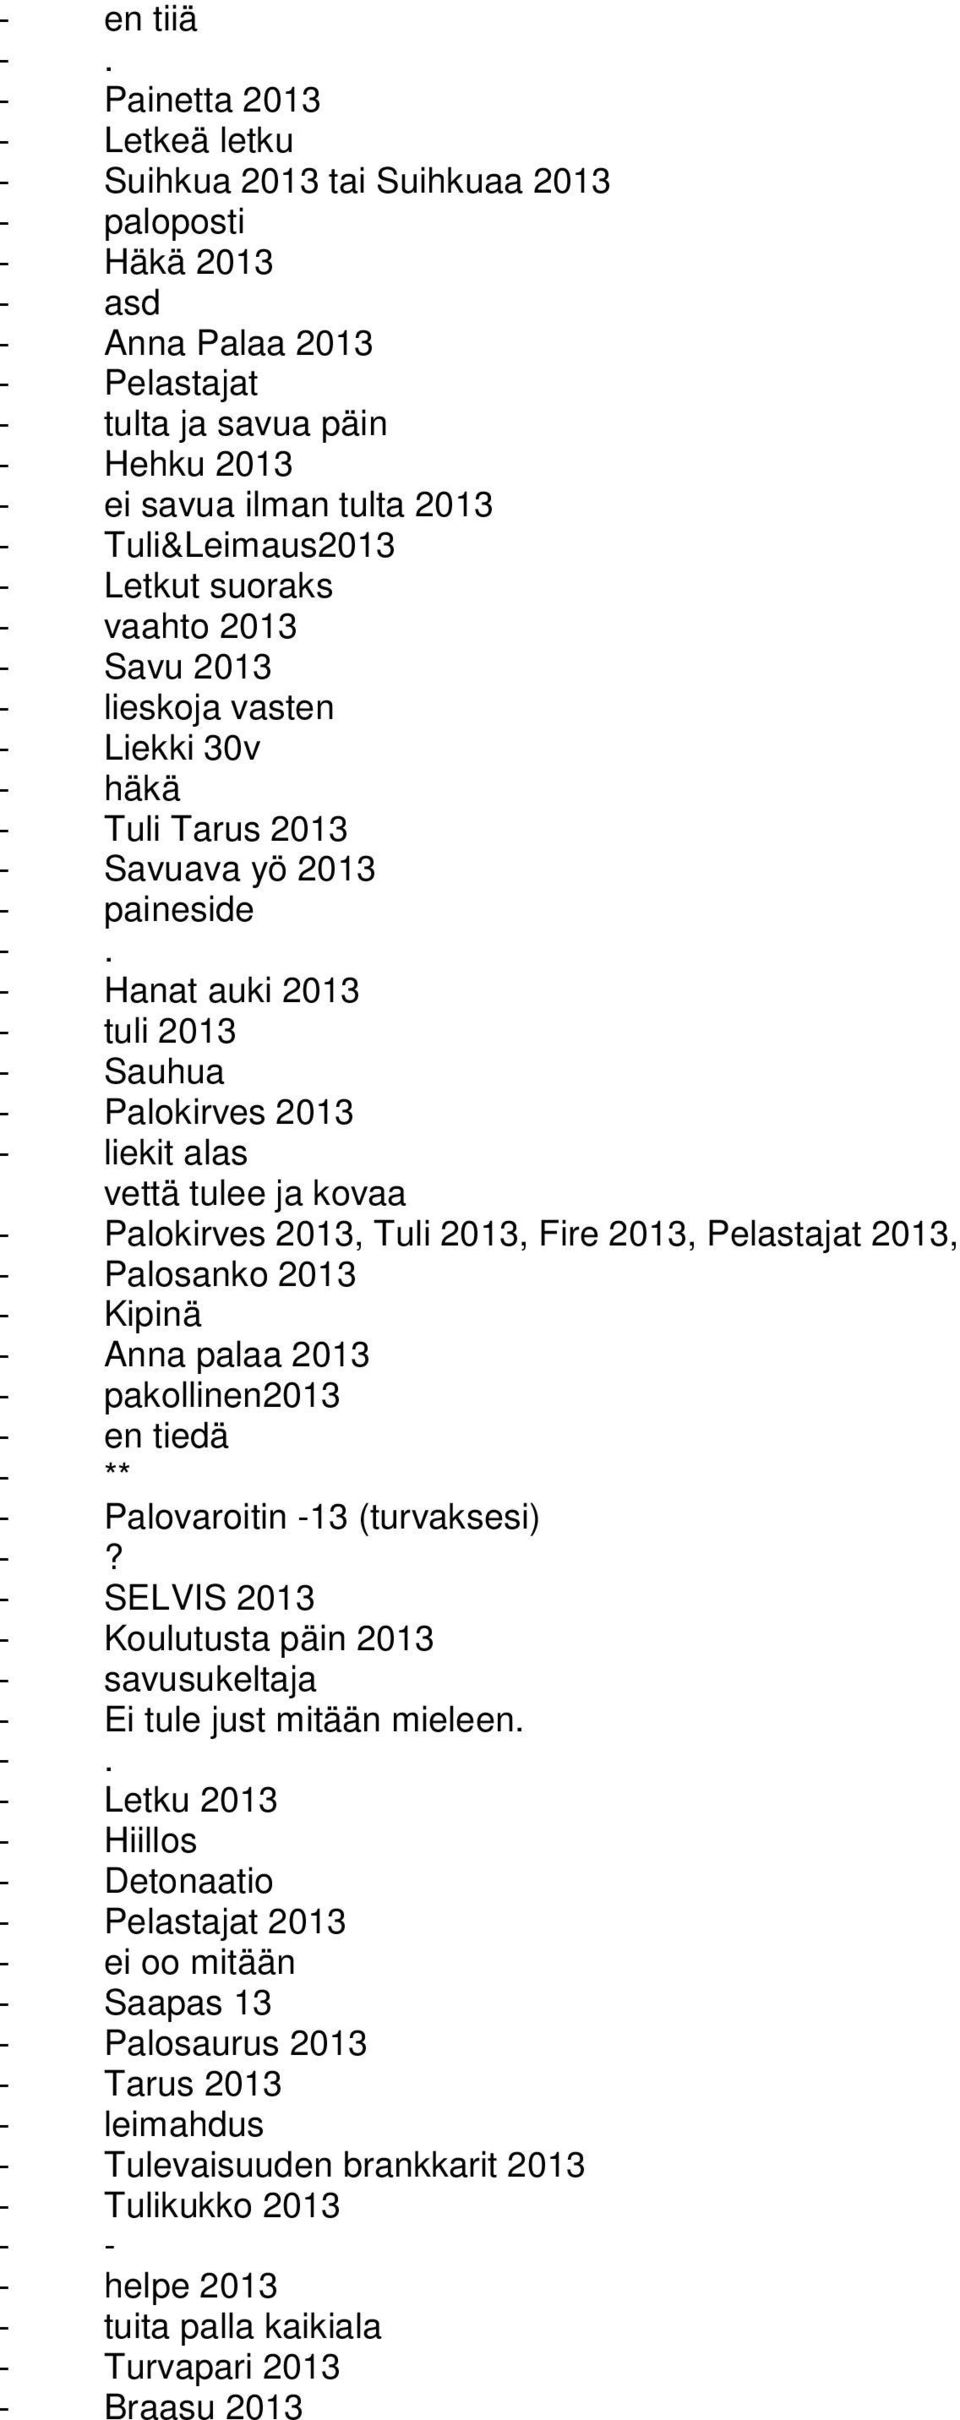 Tuli&Leimaus2013 - Letkut suoraks - vaahto 2013 - Savu 2013 - lieskoja vasten - Liekki 30v - häkä - Tuli Tarus 2013 - Savuava yö 2013 - paineside -.